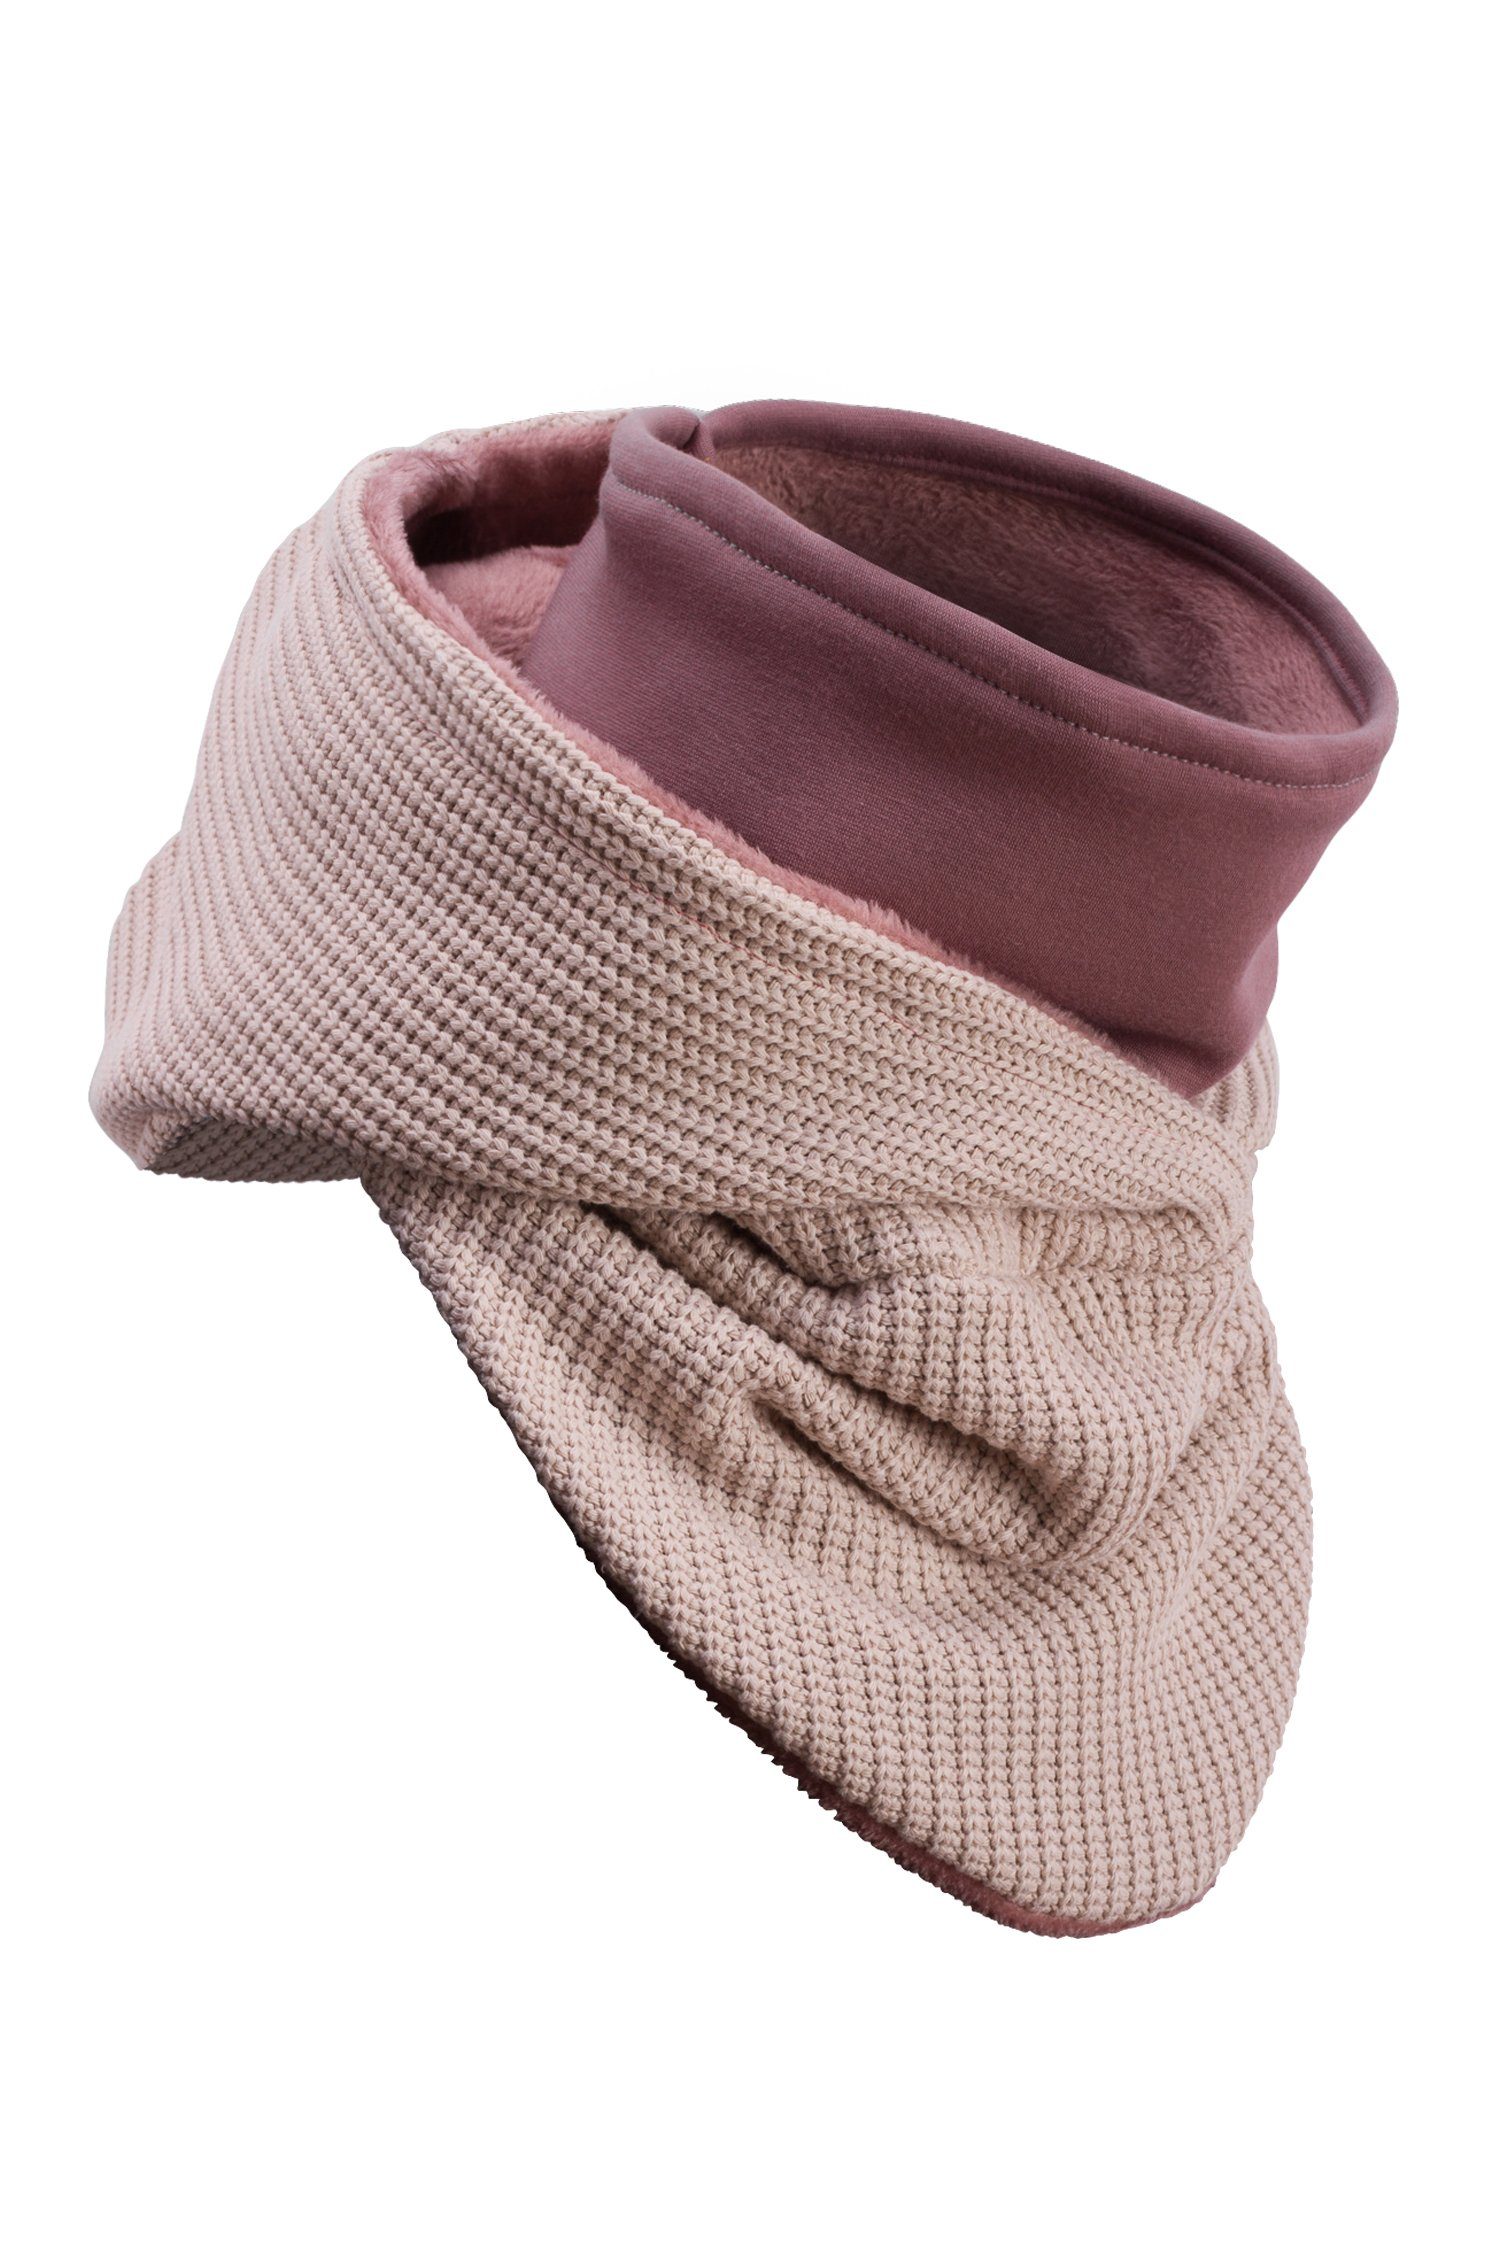 Manufaktur13 Modeschal Knit Hooded Loop - Kapuzenschal, Schal, Strickschal, mit integriertem Windbreaker Tusken | Modeschals